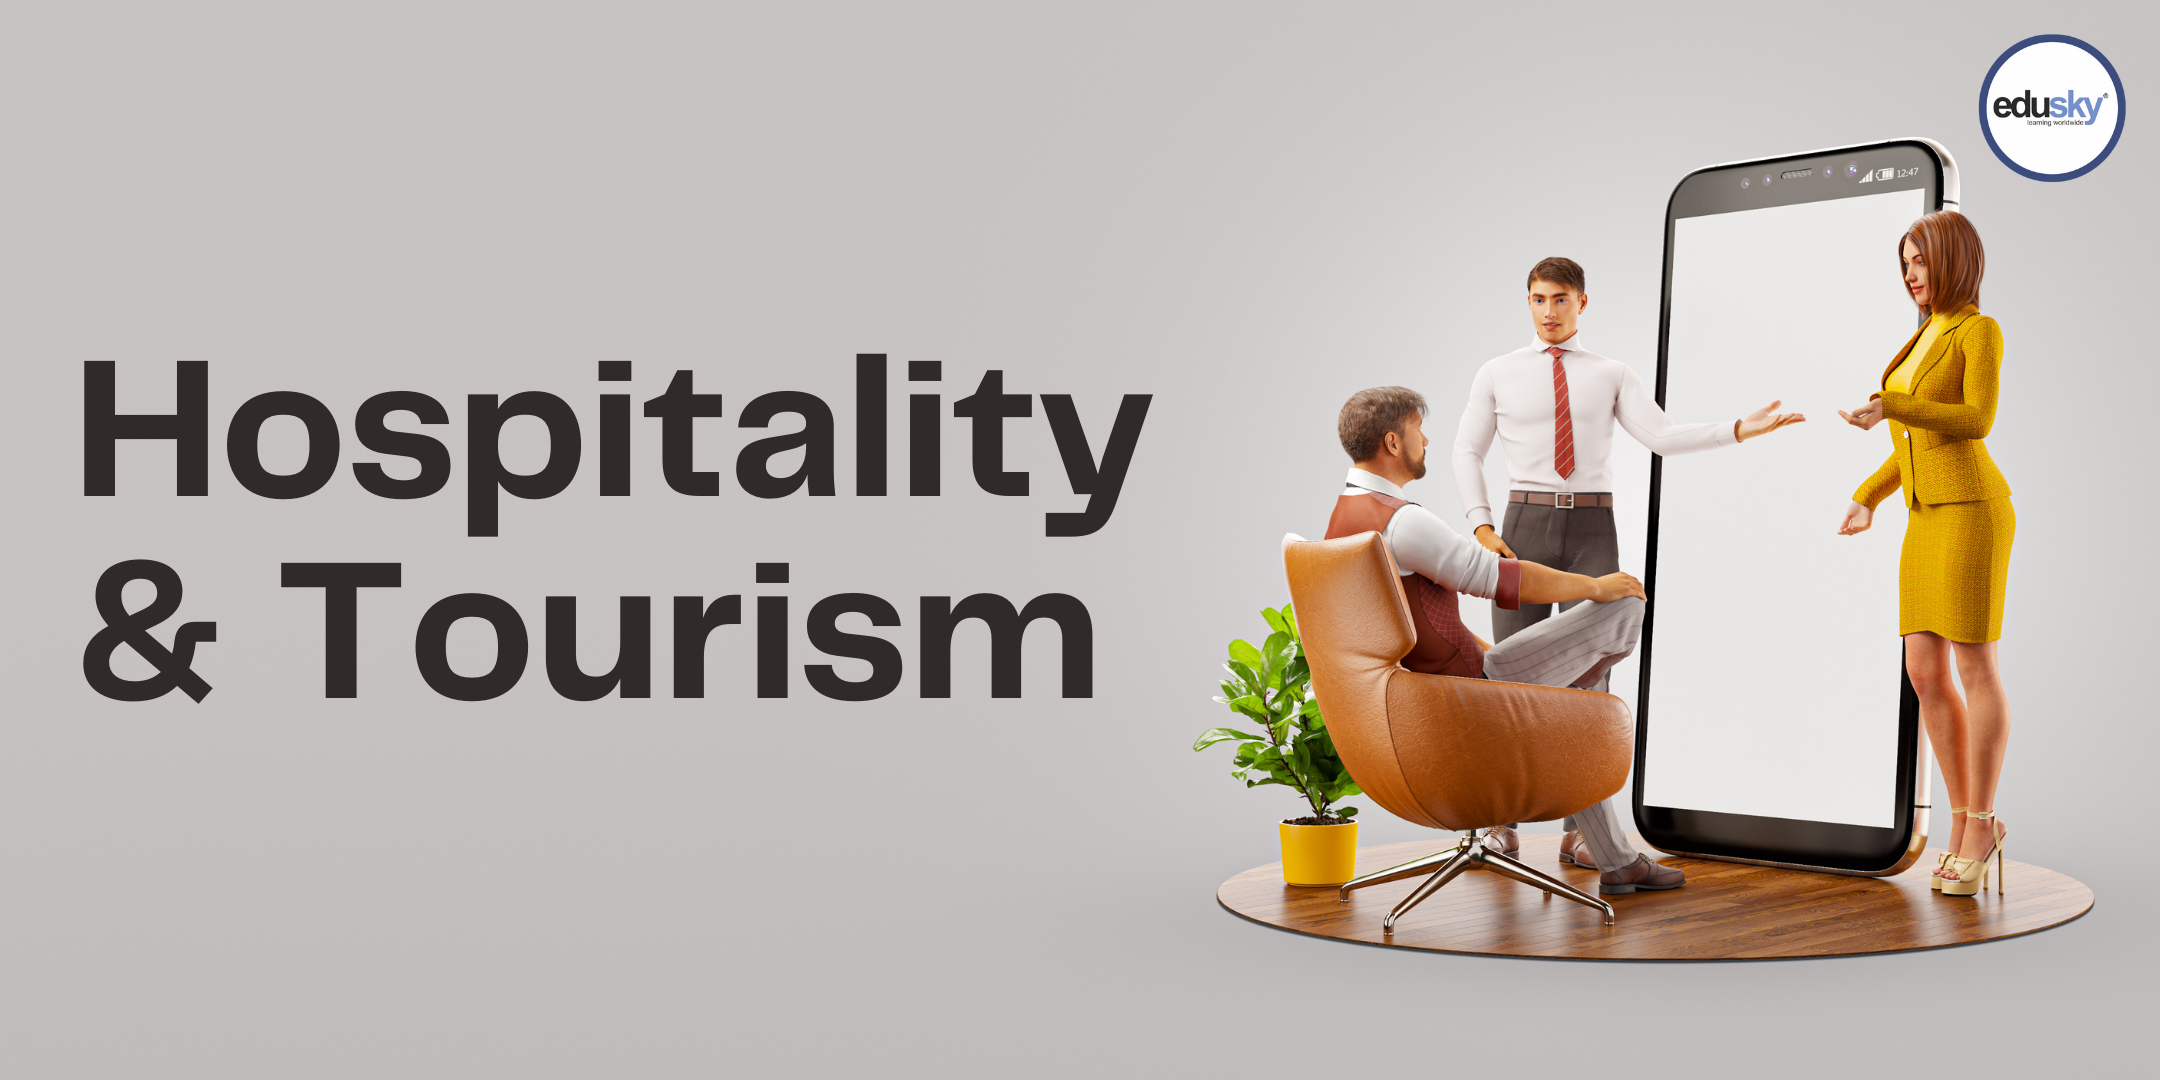 tourism and hospitality courses